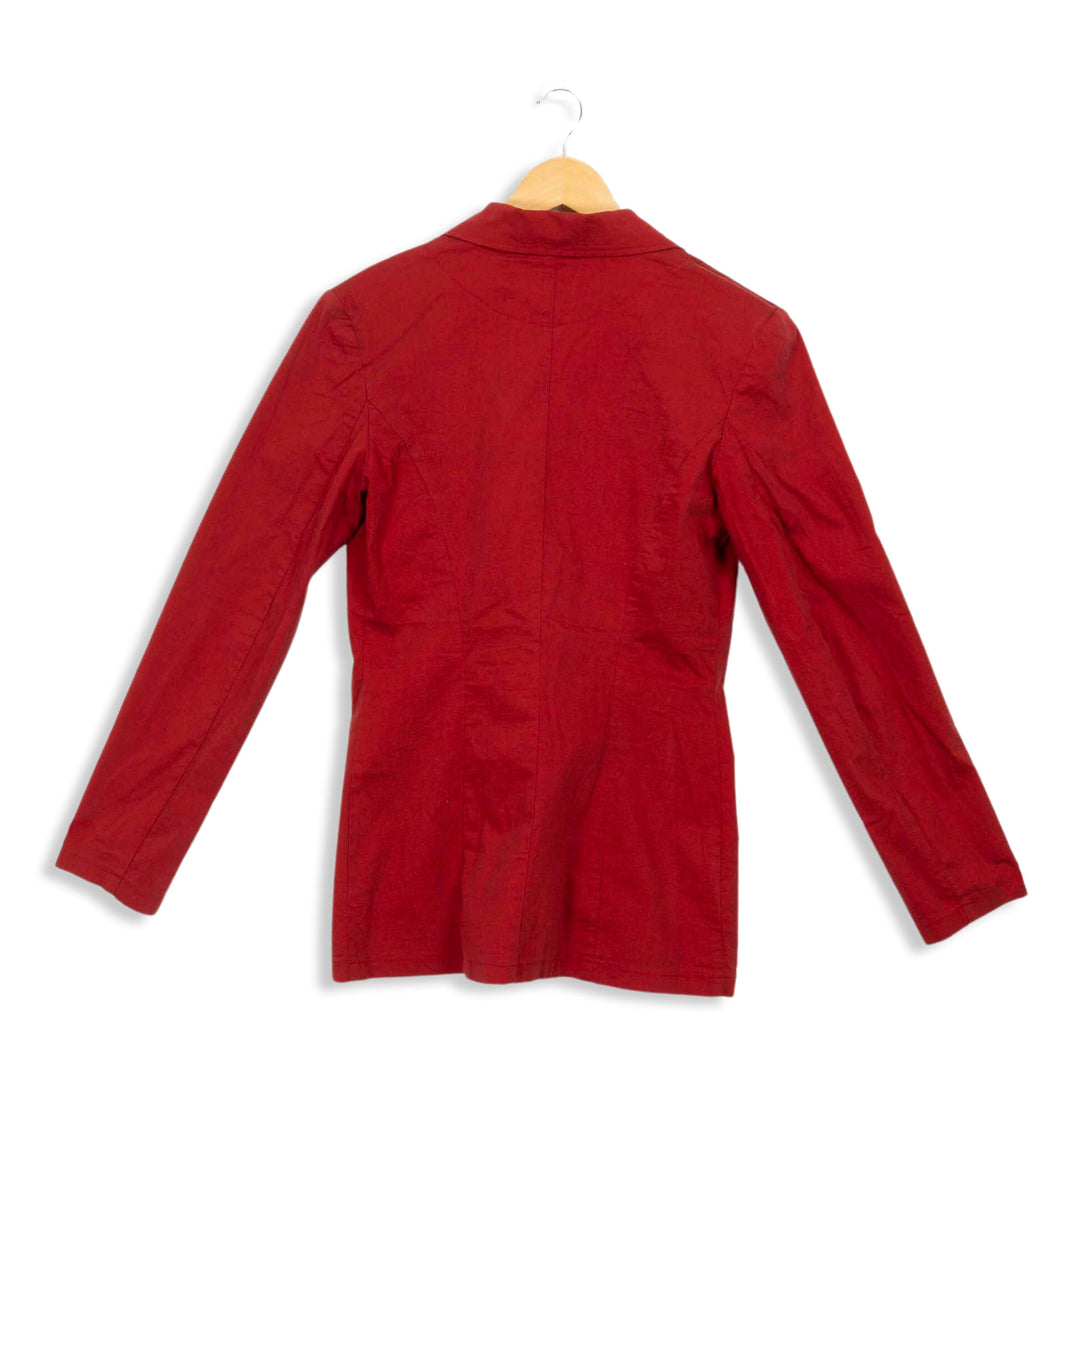 Claudie Pierlot red jacket - T2